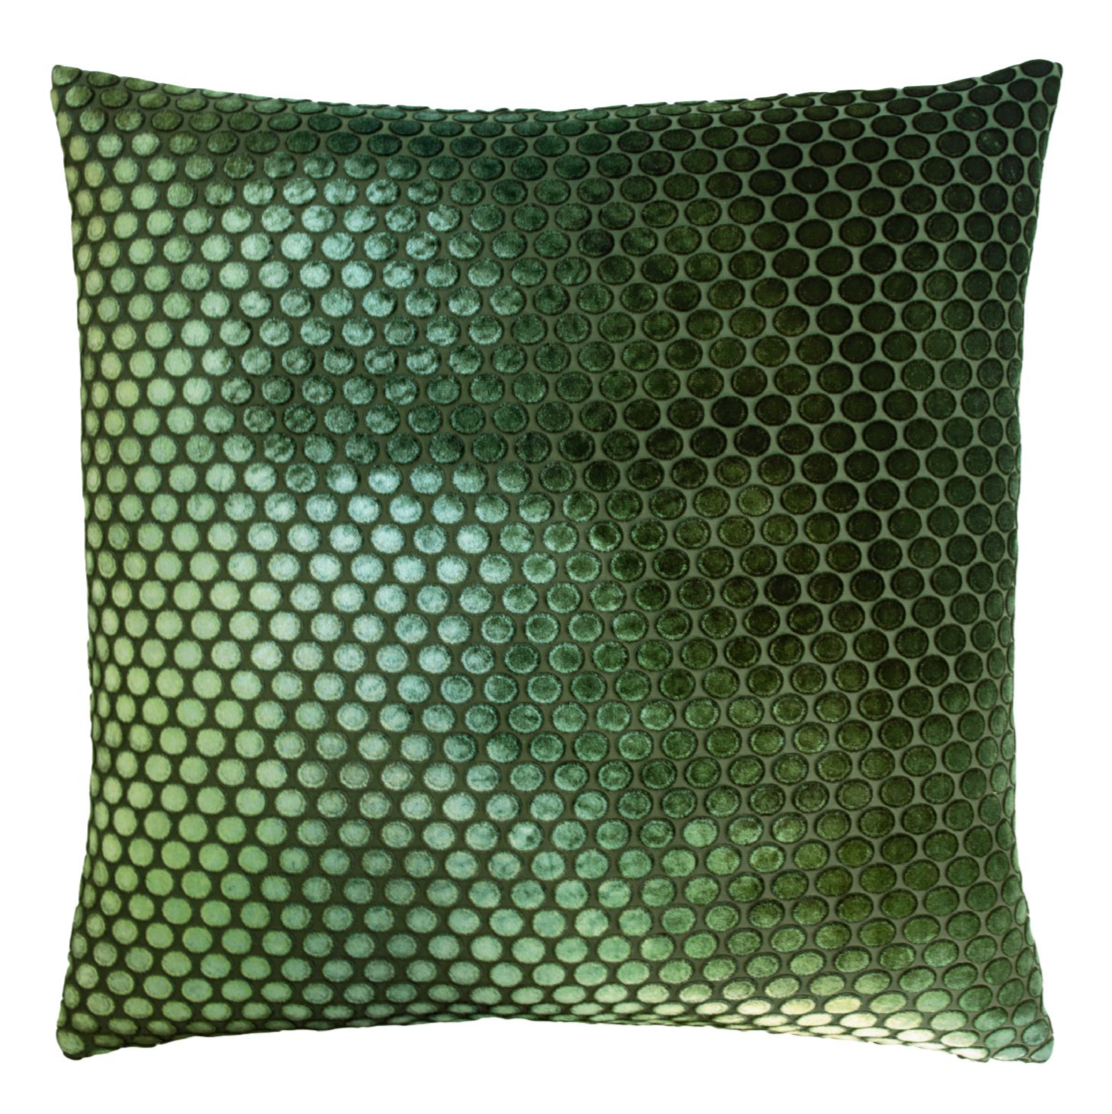 Kevin O'Brien Dots Evergreen Pillows